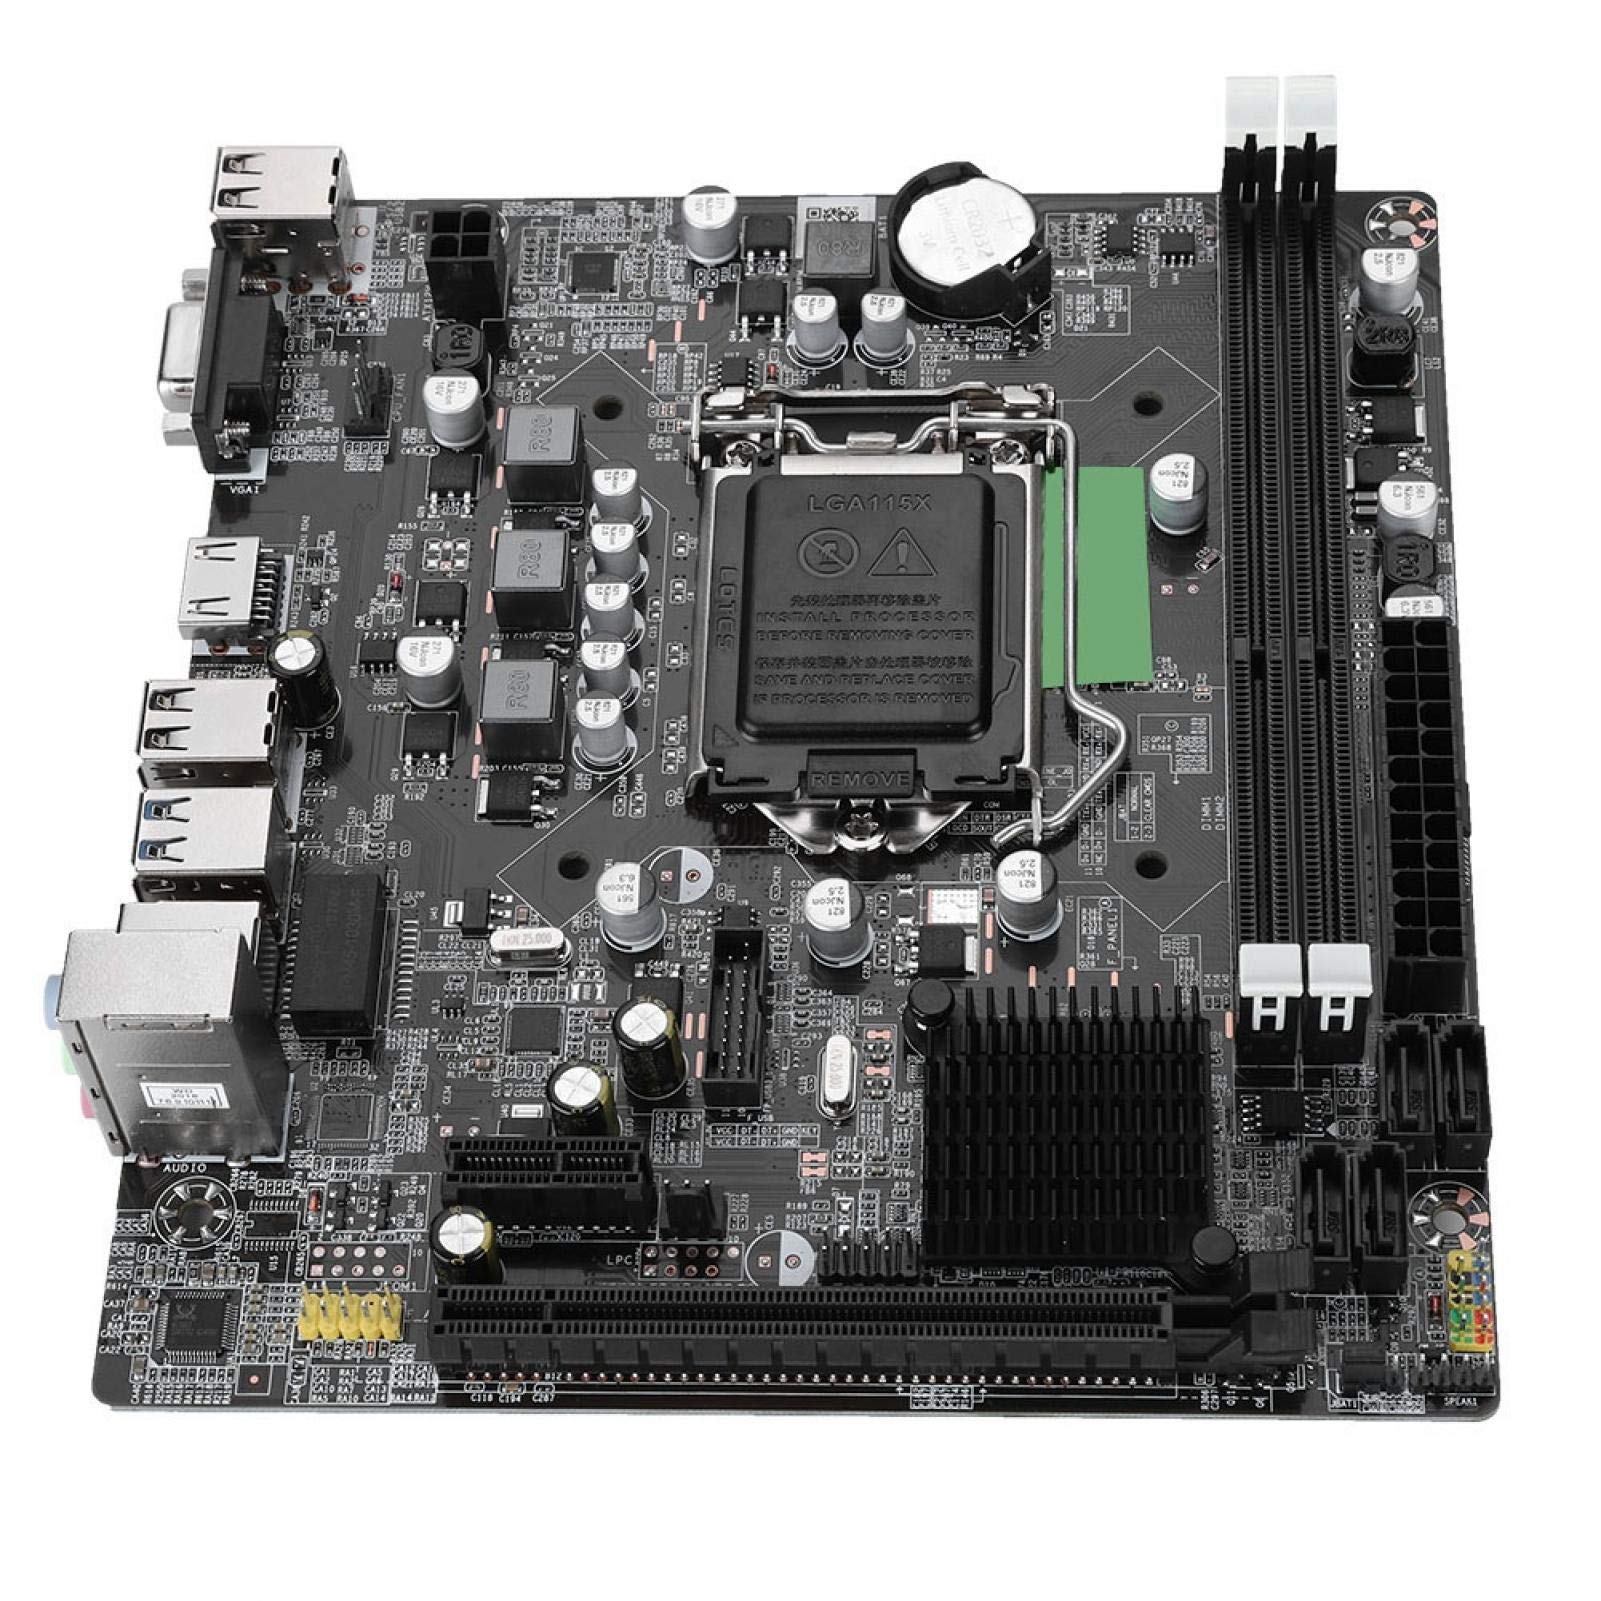 Tosuny Desktop Computer Motherboard LGA 1155 USB3.0 SATA Mainboard for Intel B75